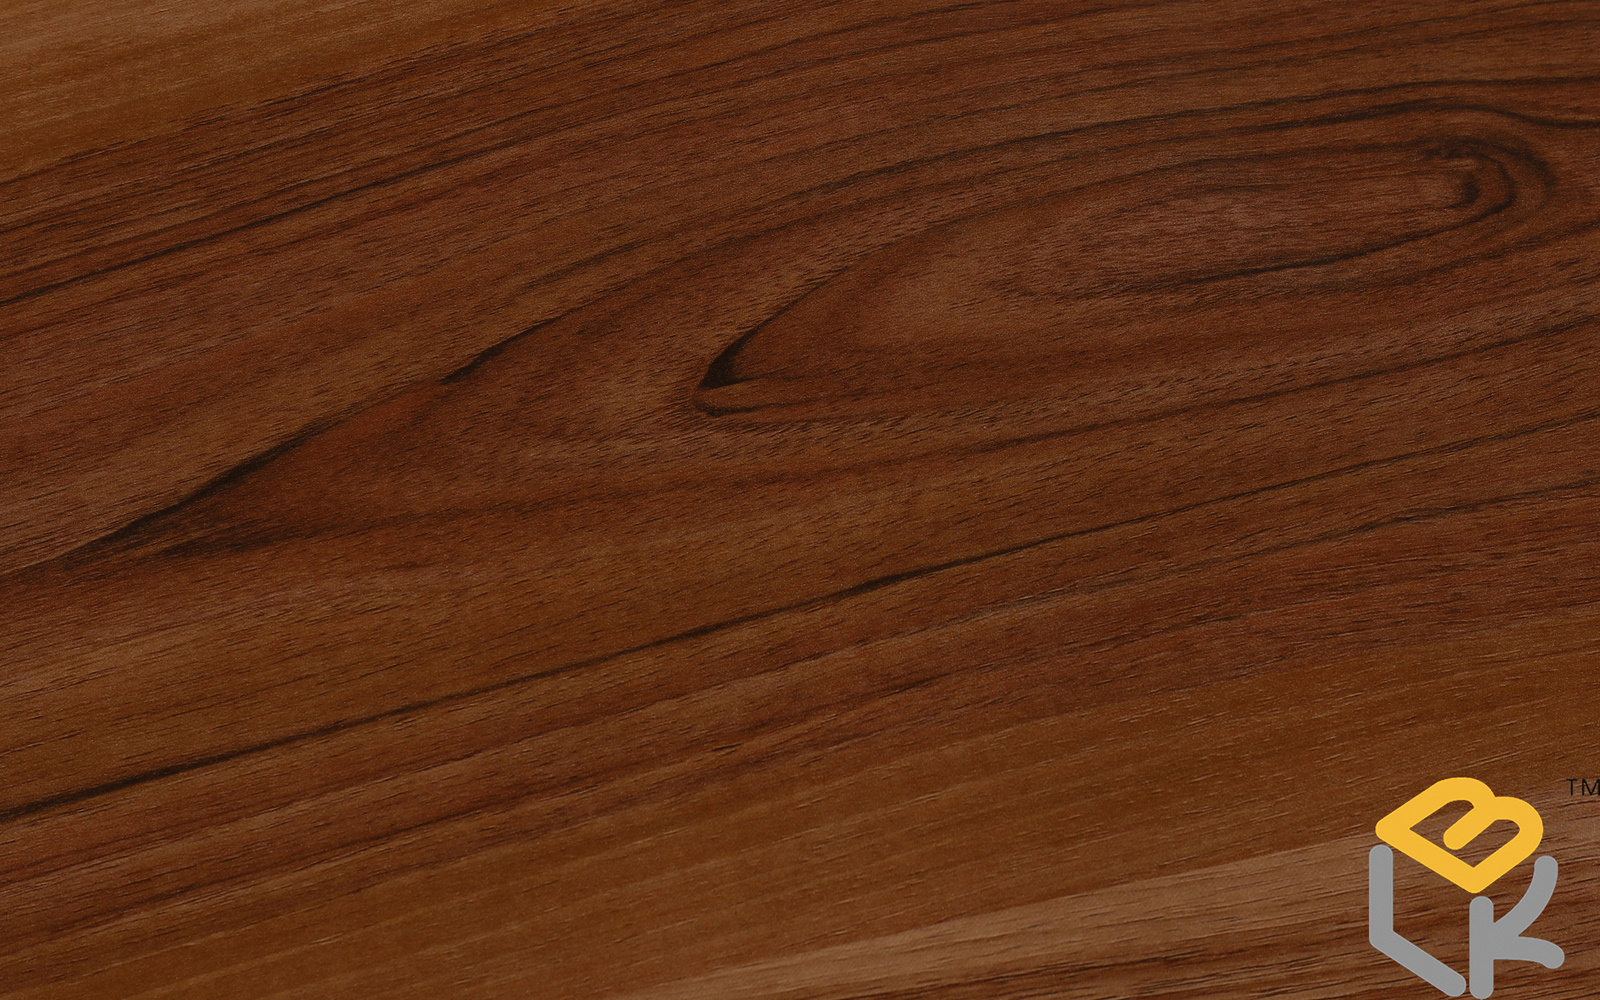 BLK Decor melamine woodgrain faced plywood